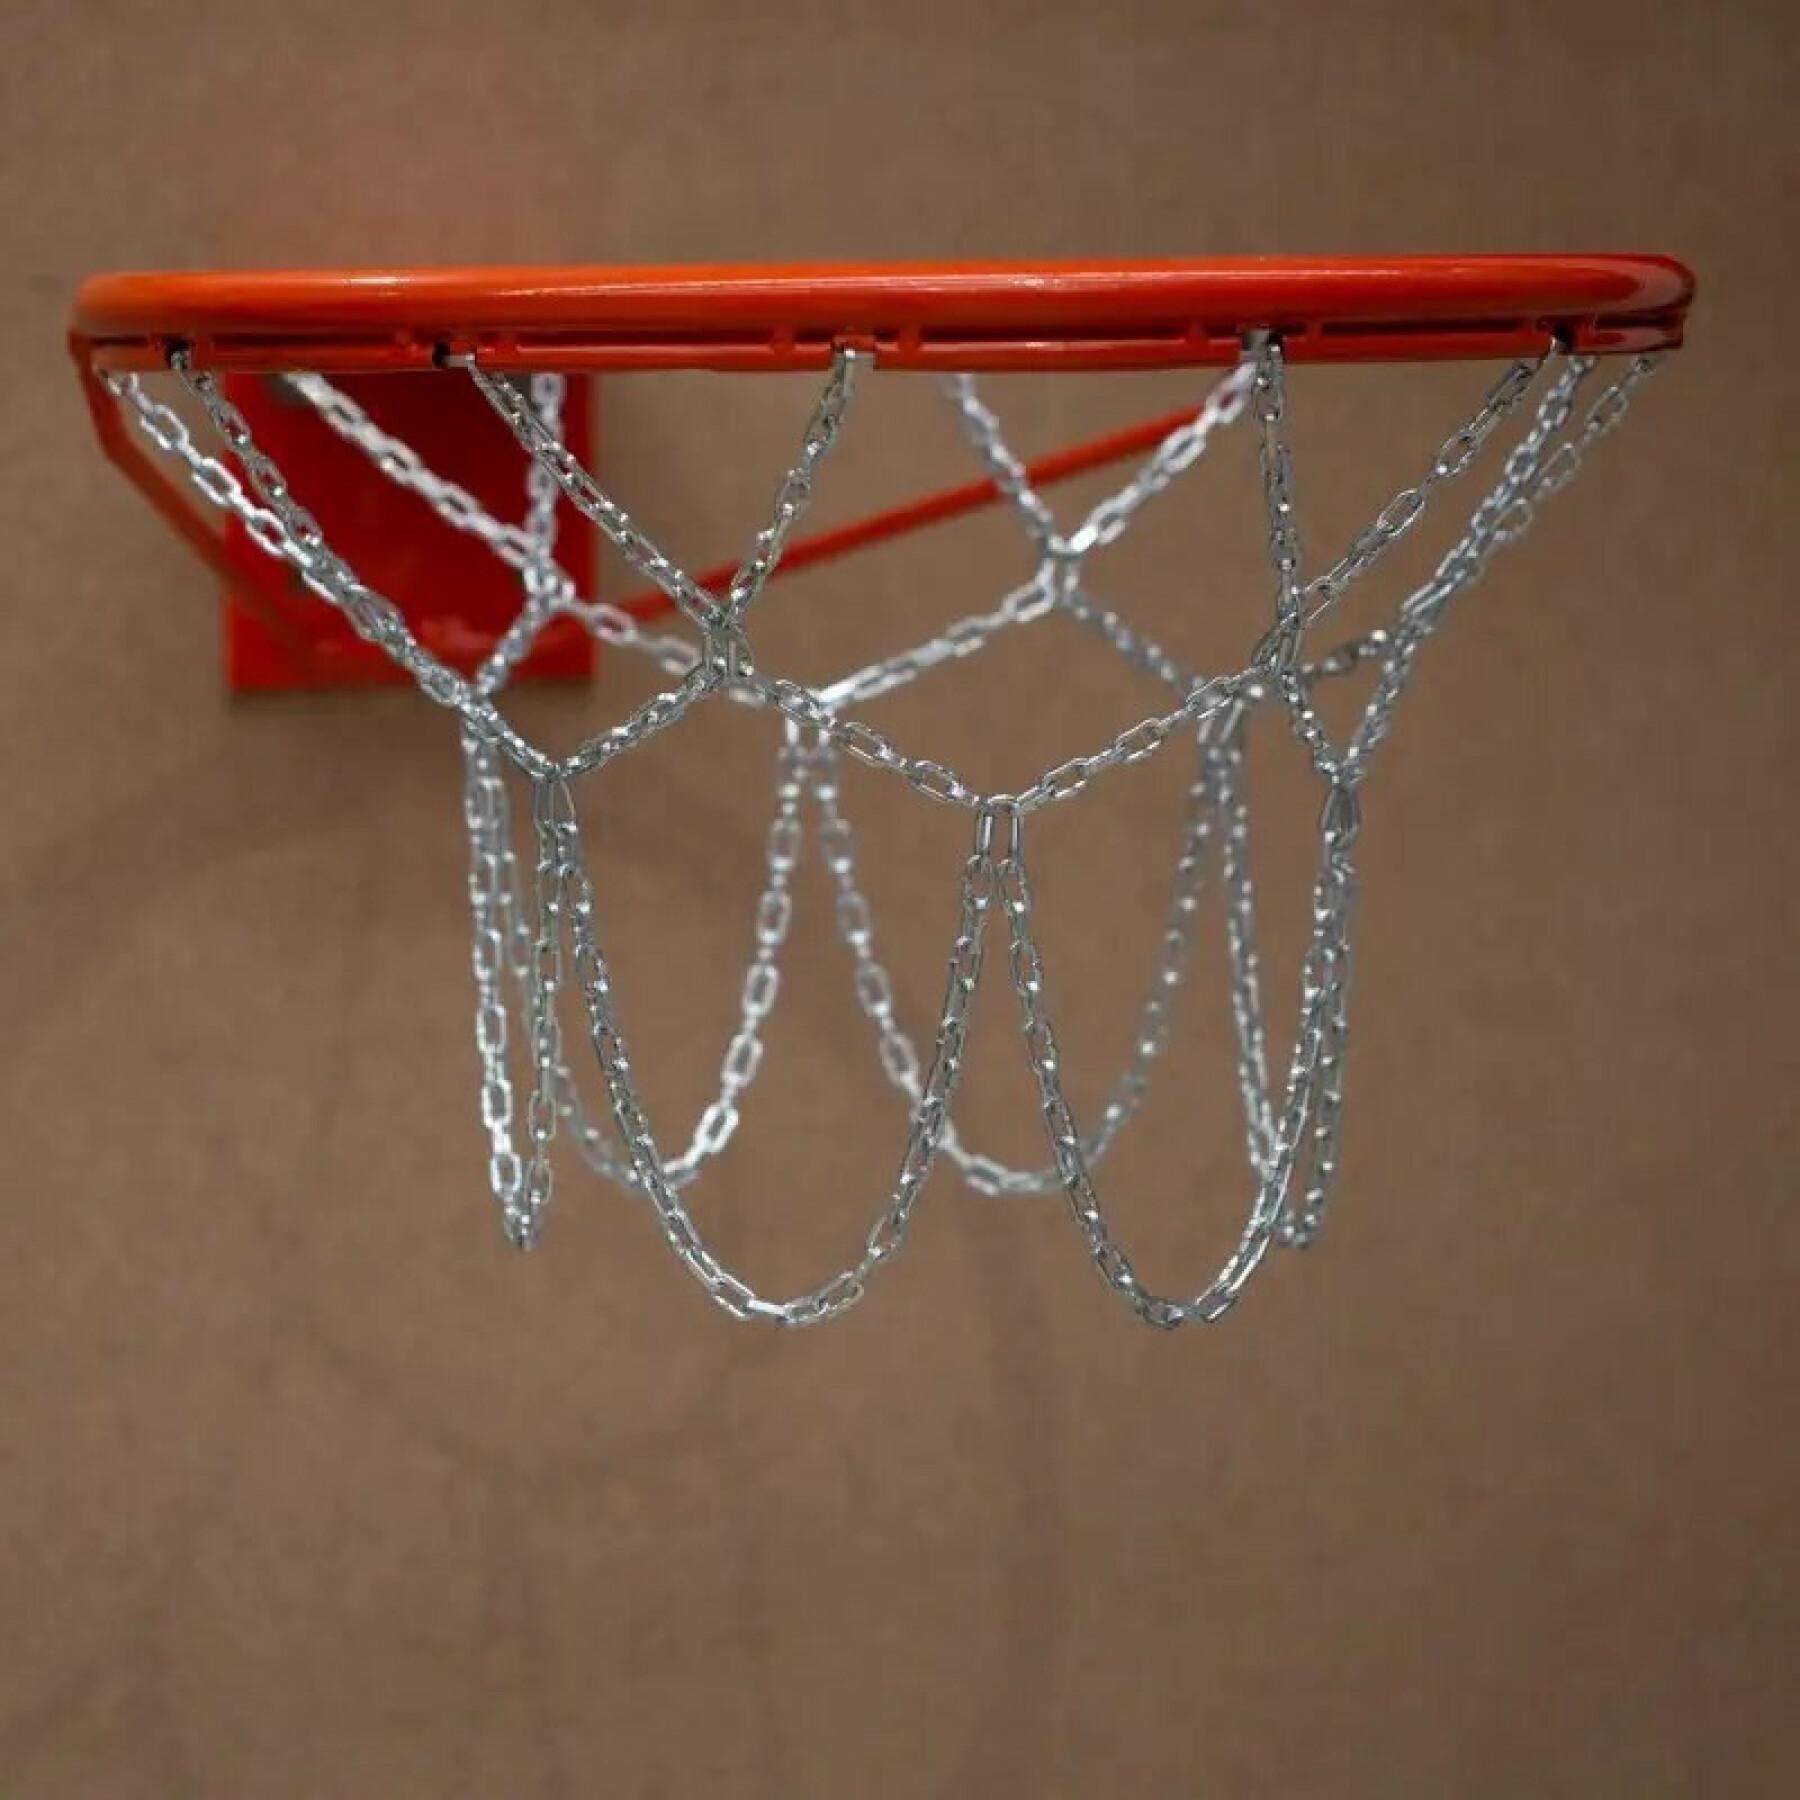 herwinnen reservoir Bladeren verzamelen Anti-vandalisme basketbalnet Softee - Basketbalnetten - Manden - Uitrusting